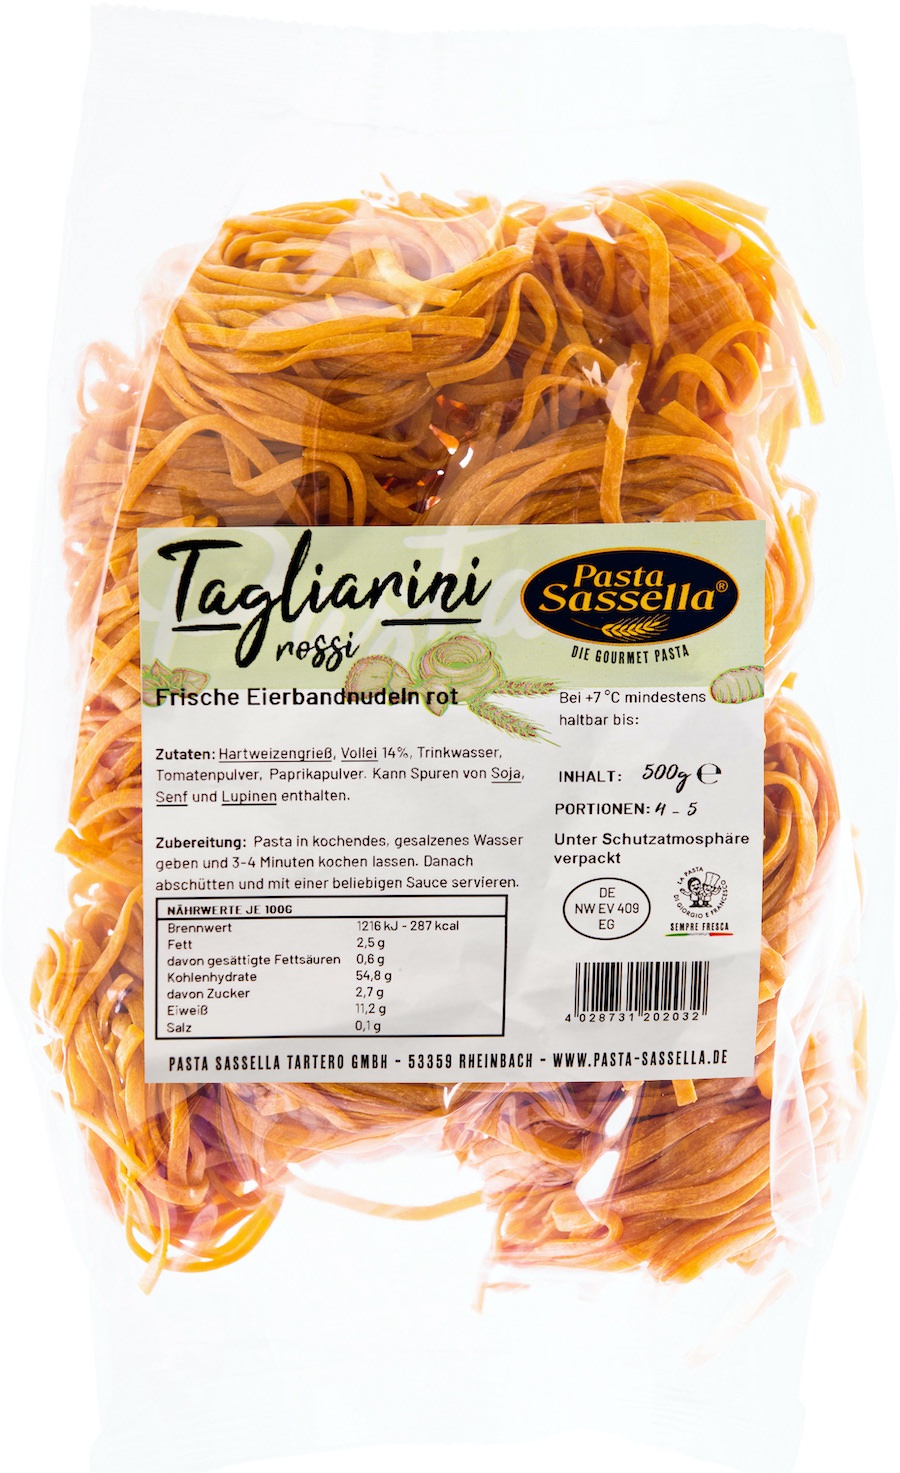 Pasta Sassella, Verpackung TAGLIARINI-ROSSI